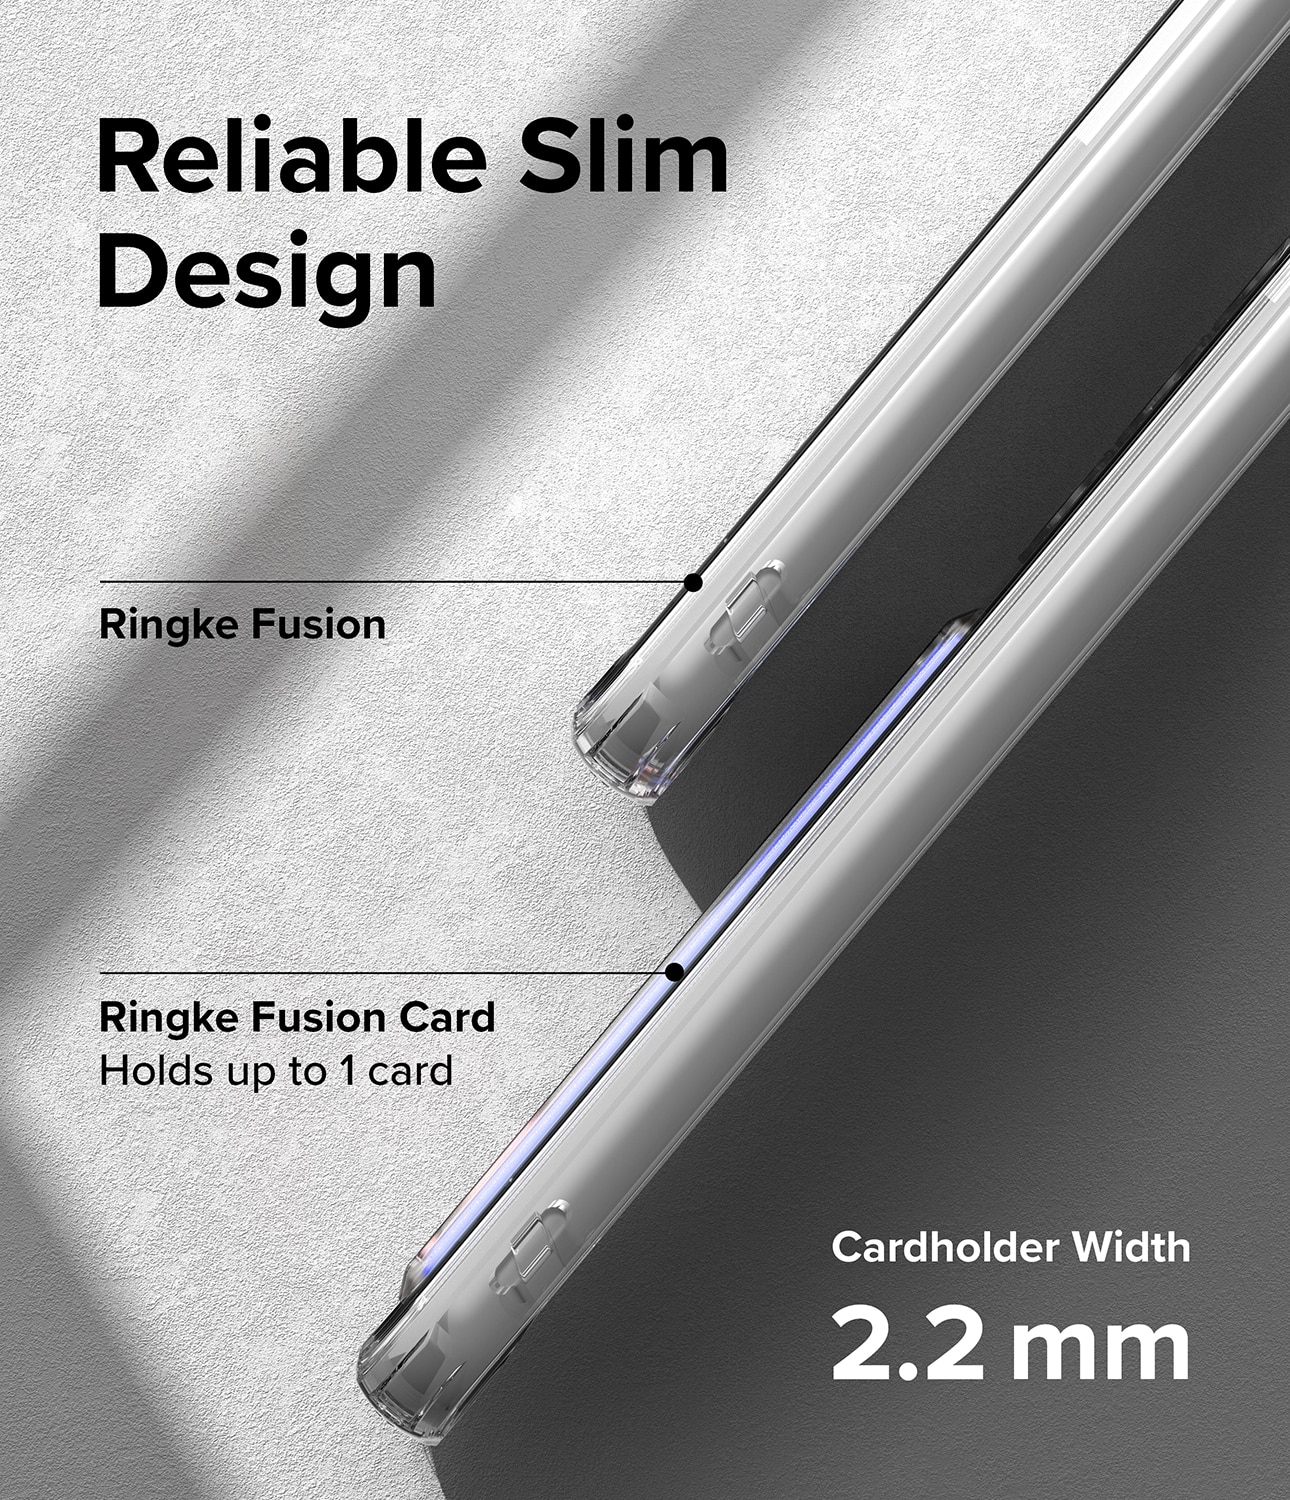 Coque Fusion Card Samsung Galaxy A54, transparent